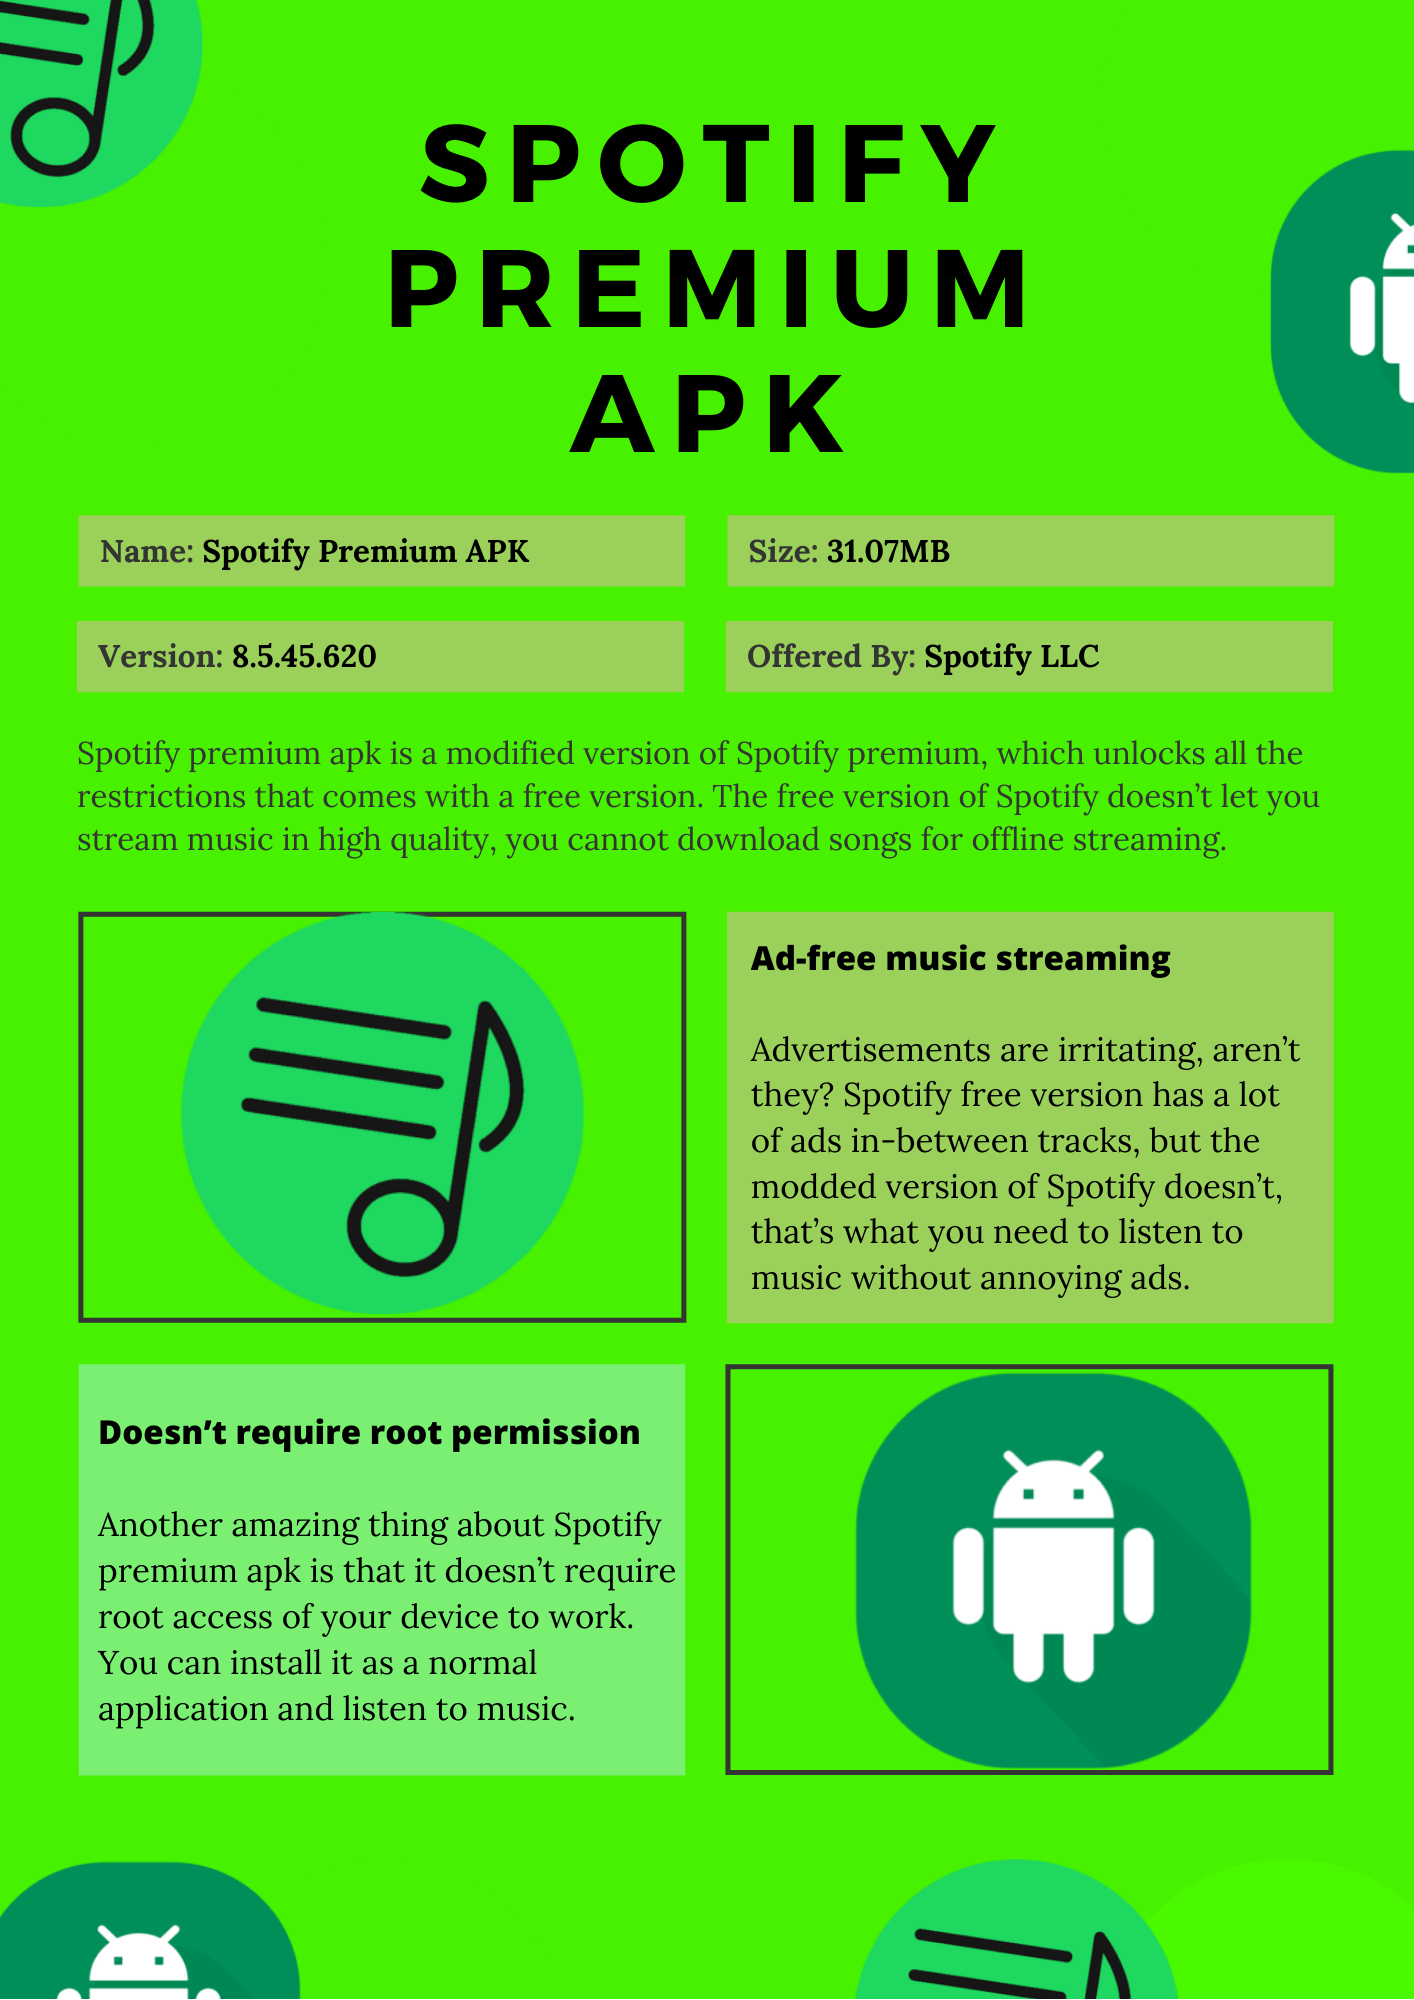 Spotify Premium APK Features